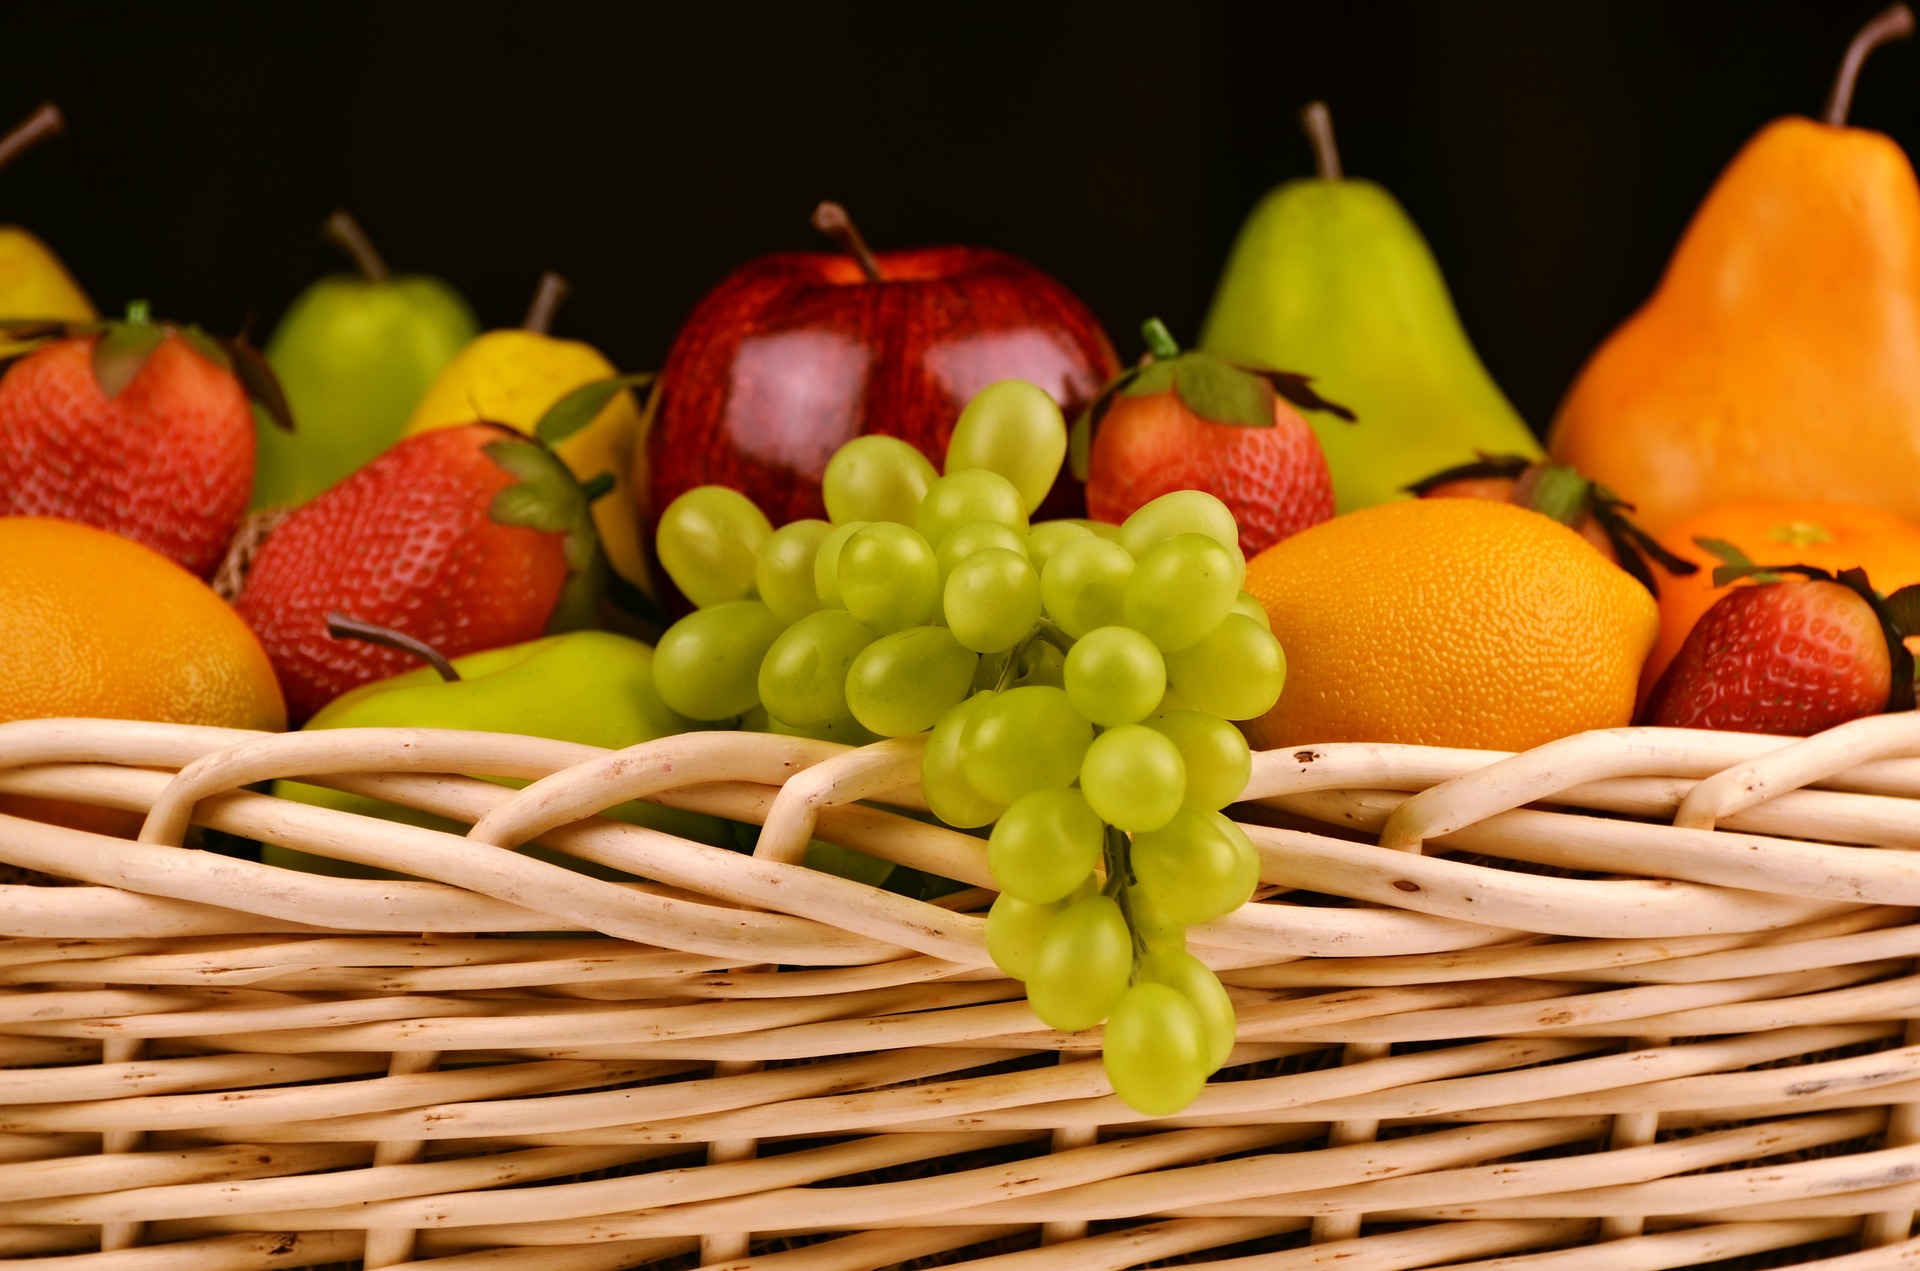 Hrana fruit basket 1114060 1920